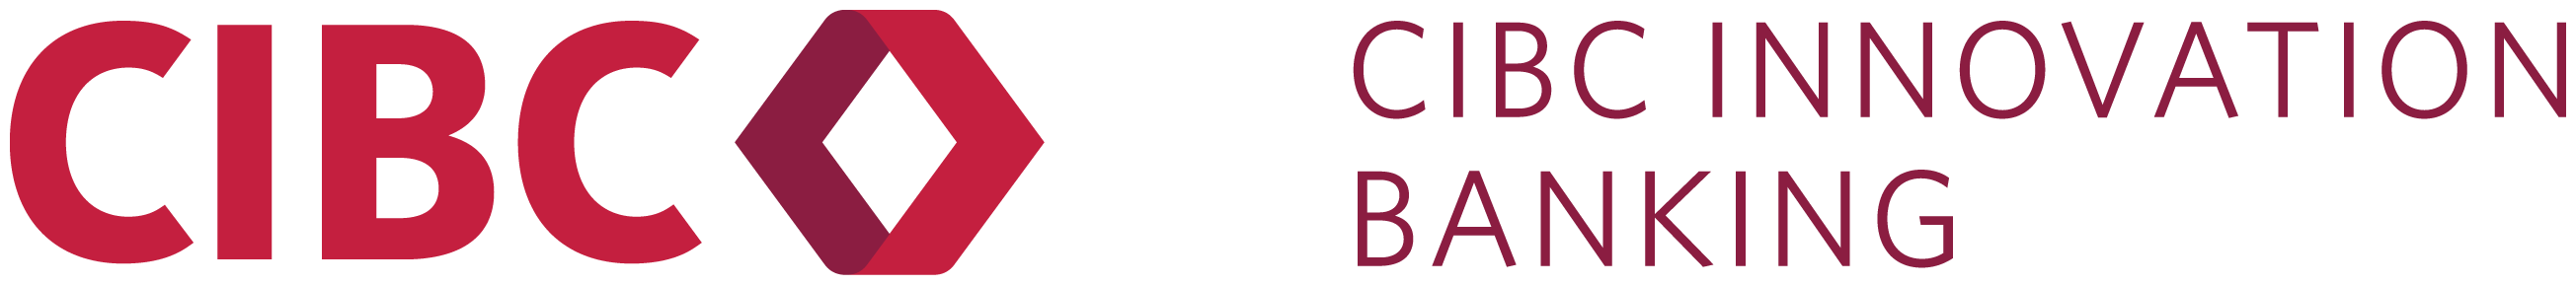 CIBC Innovation Banking 